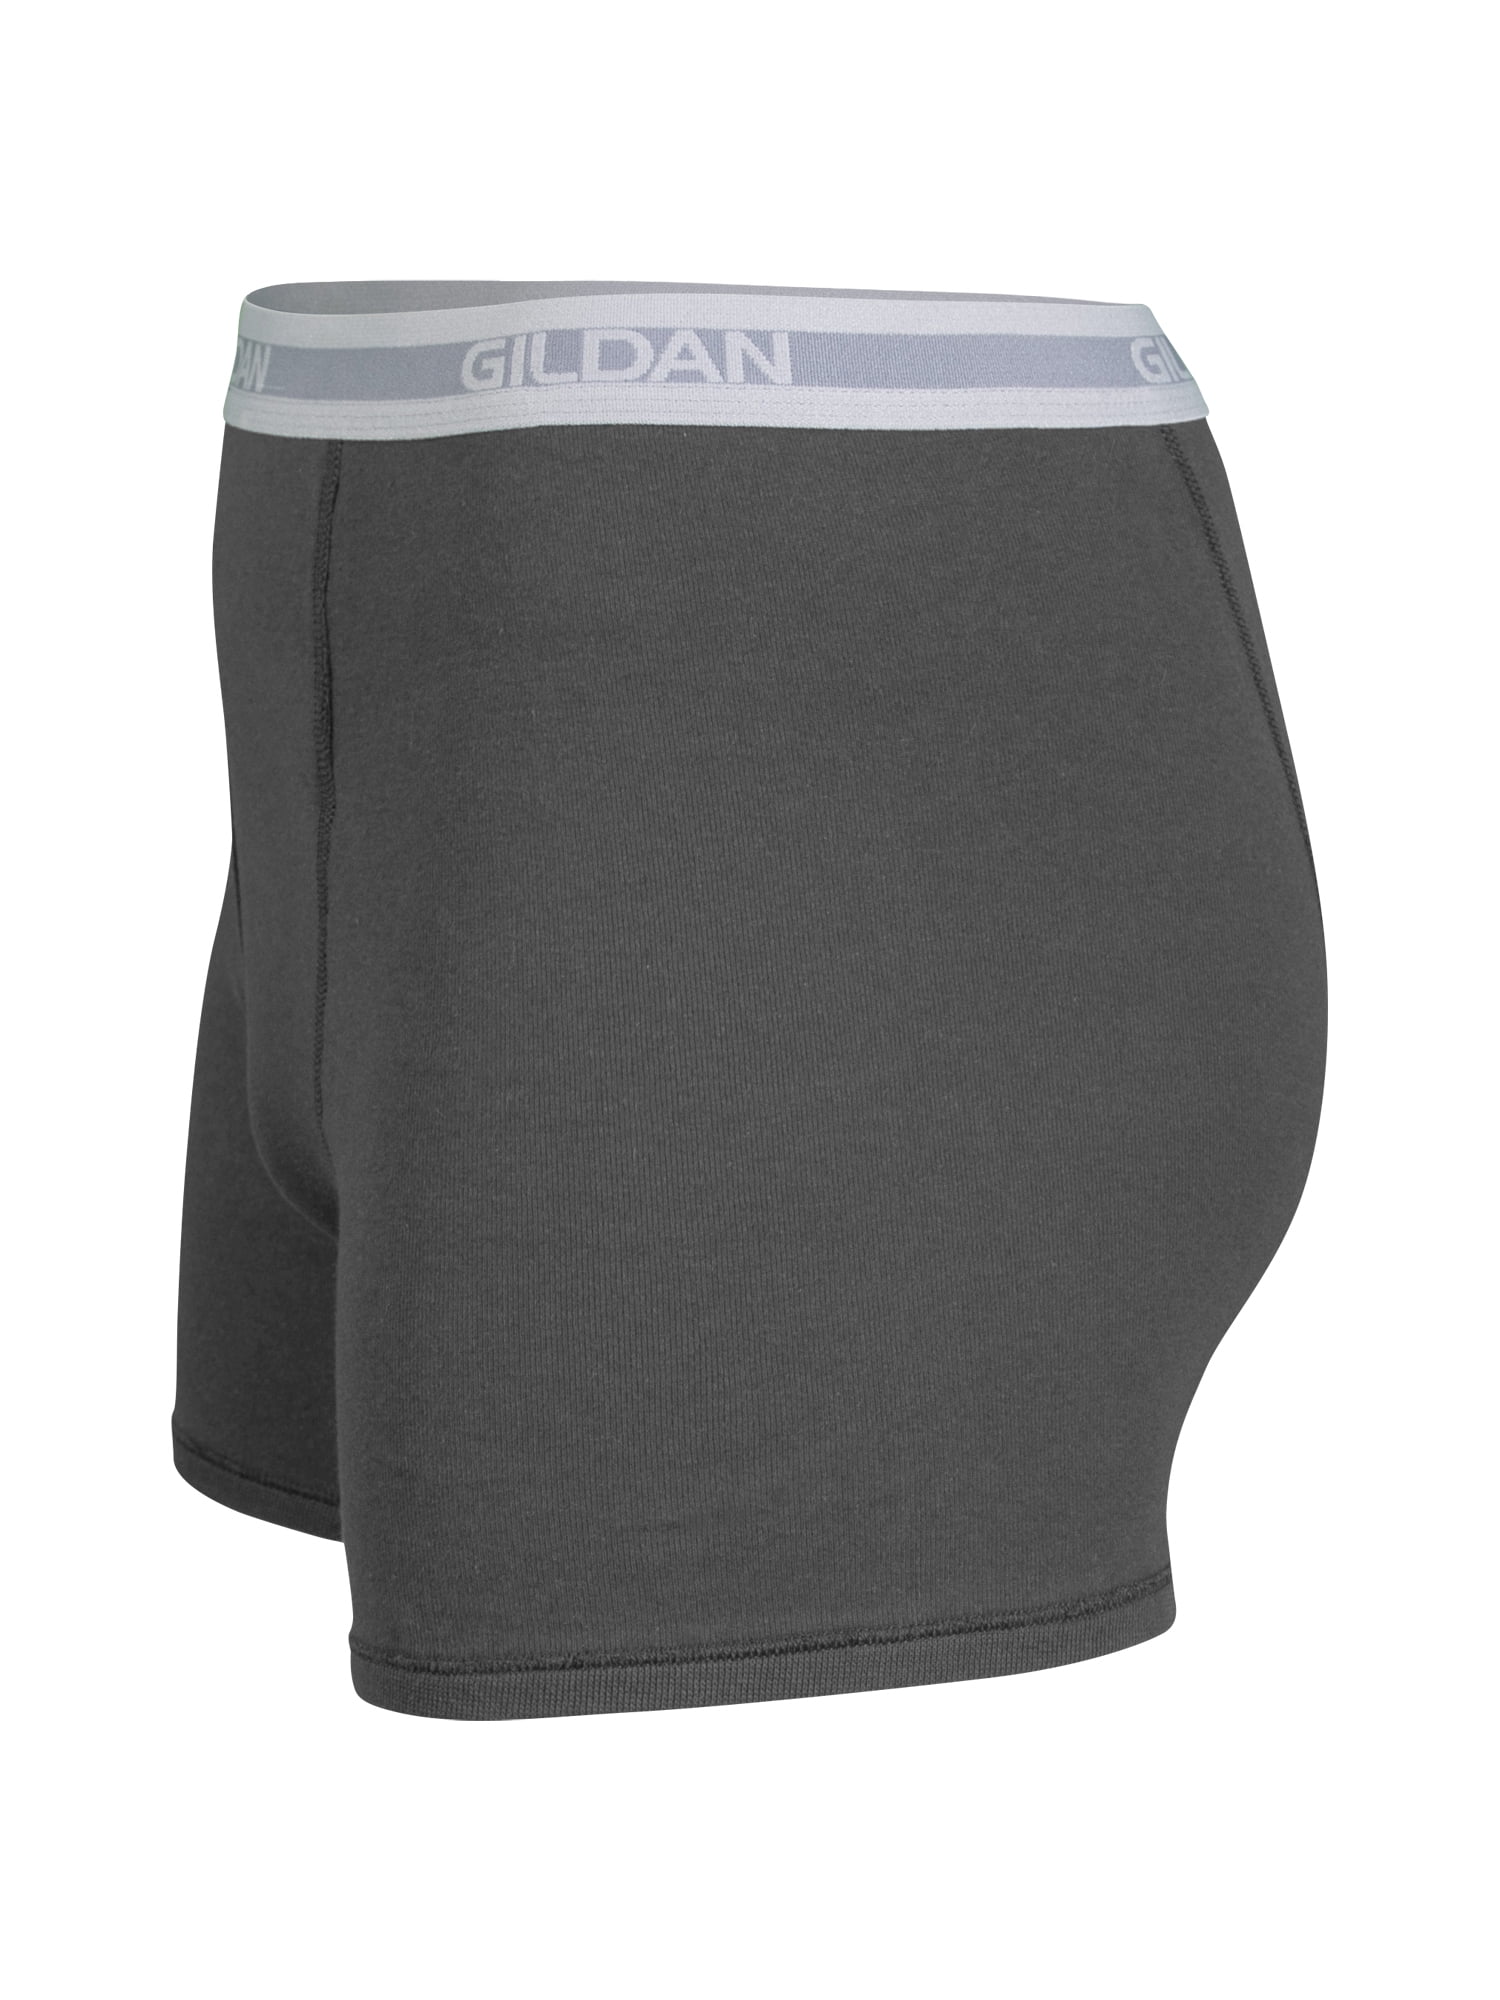 Gildan Men's 4-Pack Boxer Brief, Sport Grey/Charcoal/Black, L at   Men's Clothing store